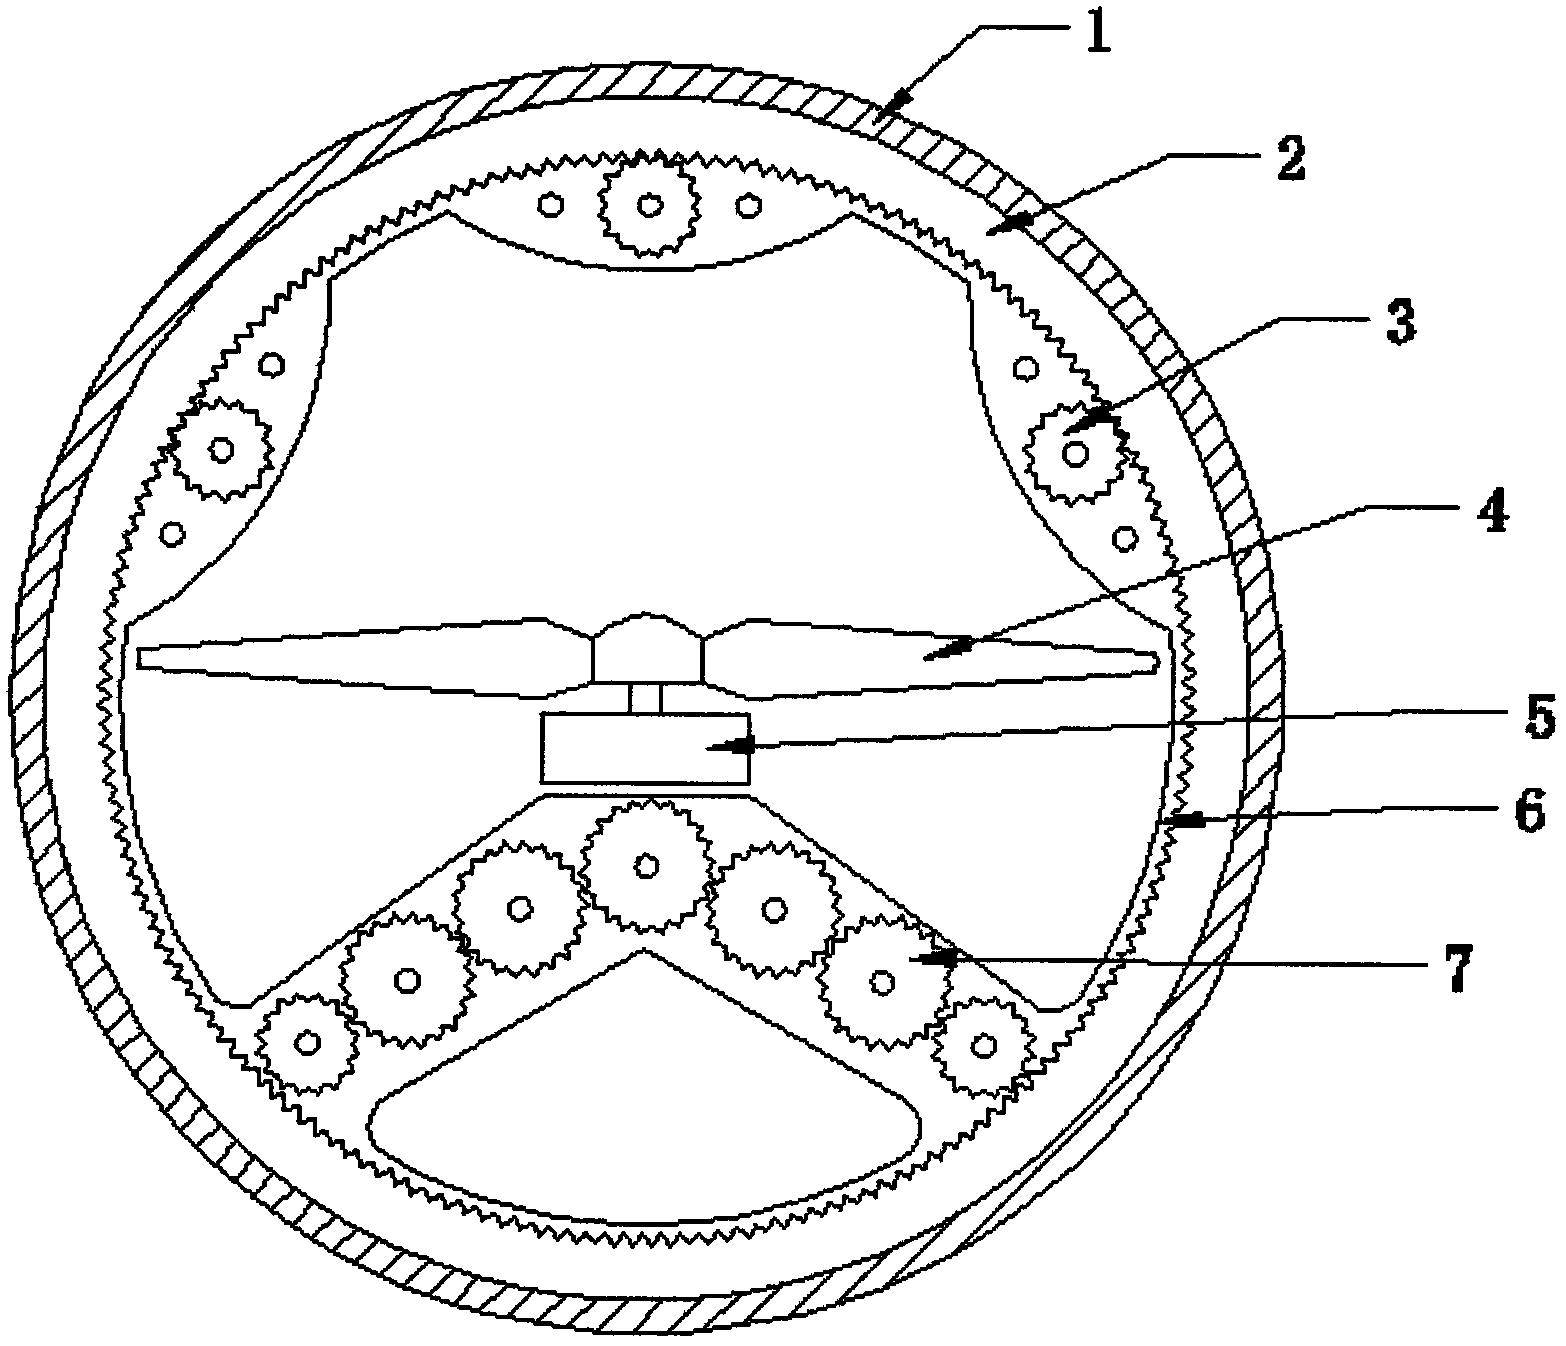 Novel circular rail type hollow wheel and aerocar system